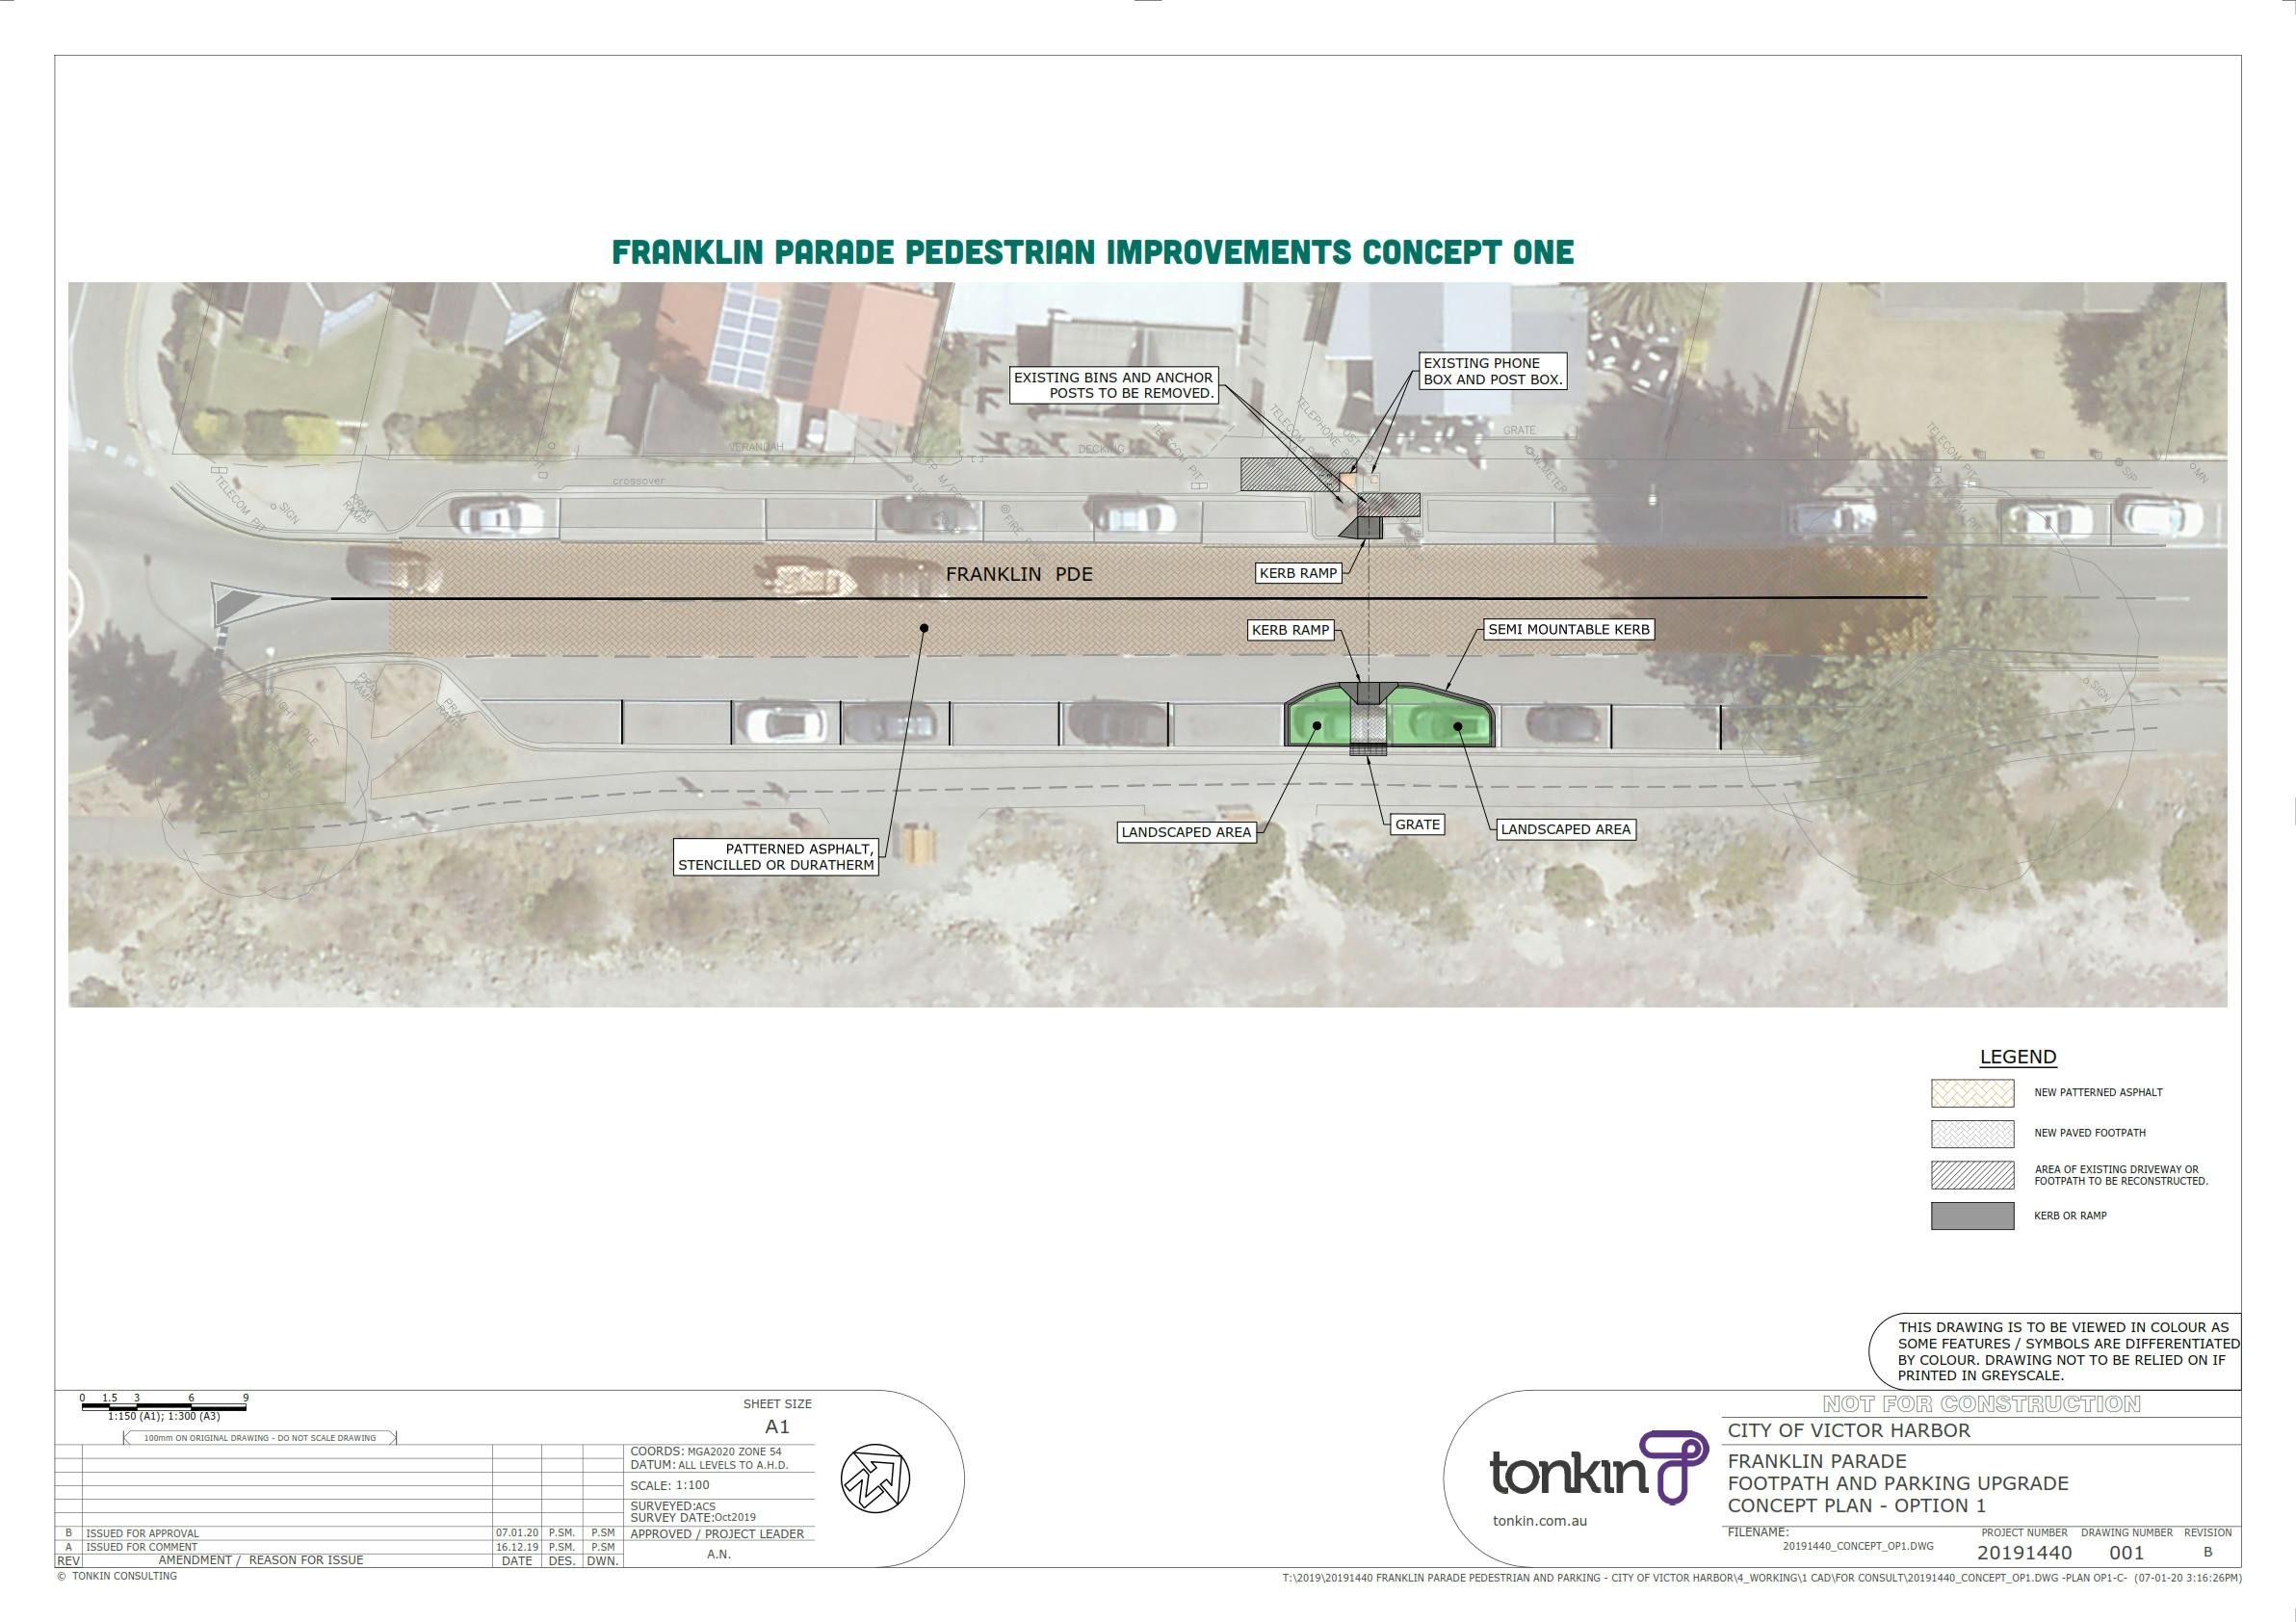 Option 1: Franklin Parade Pedestrian Improvements Concept